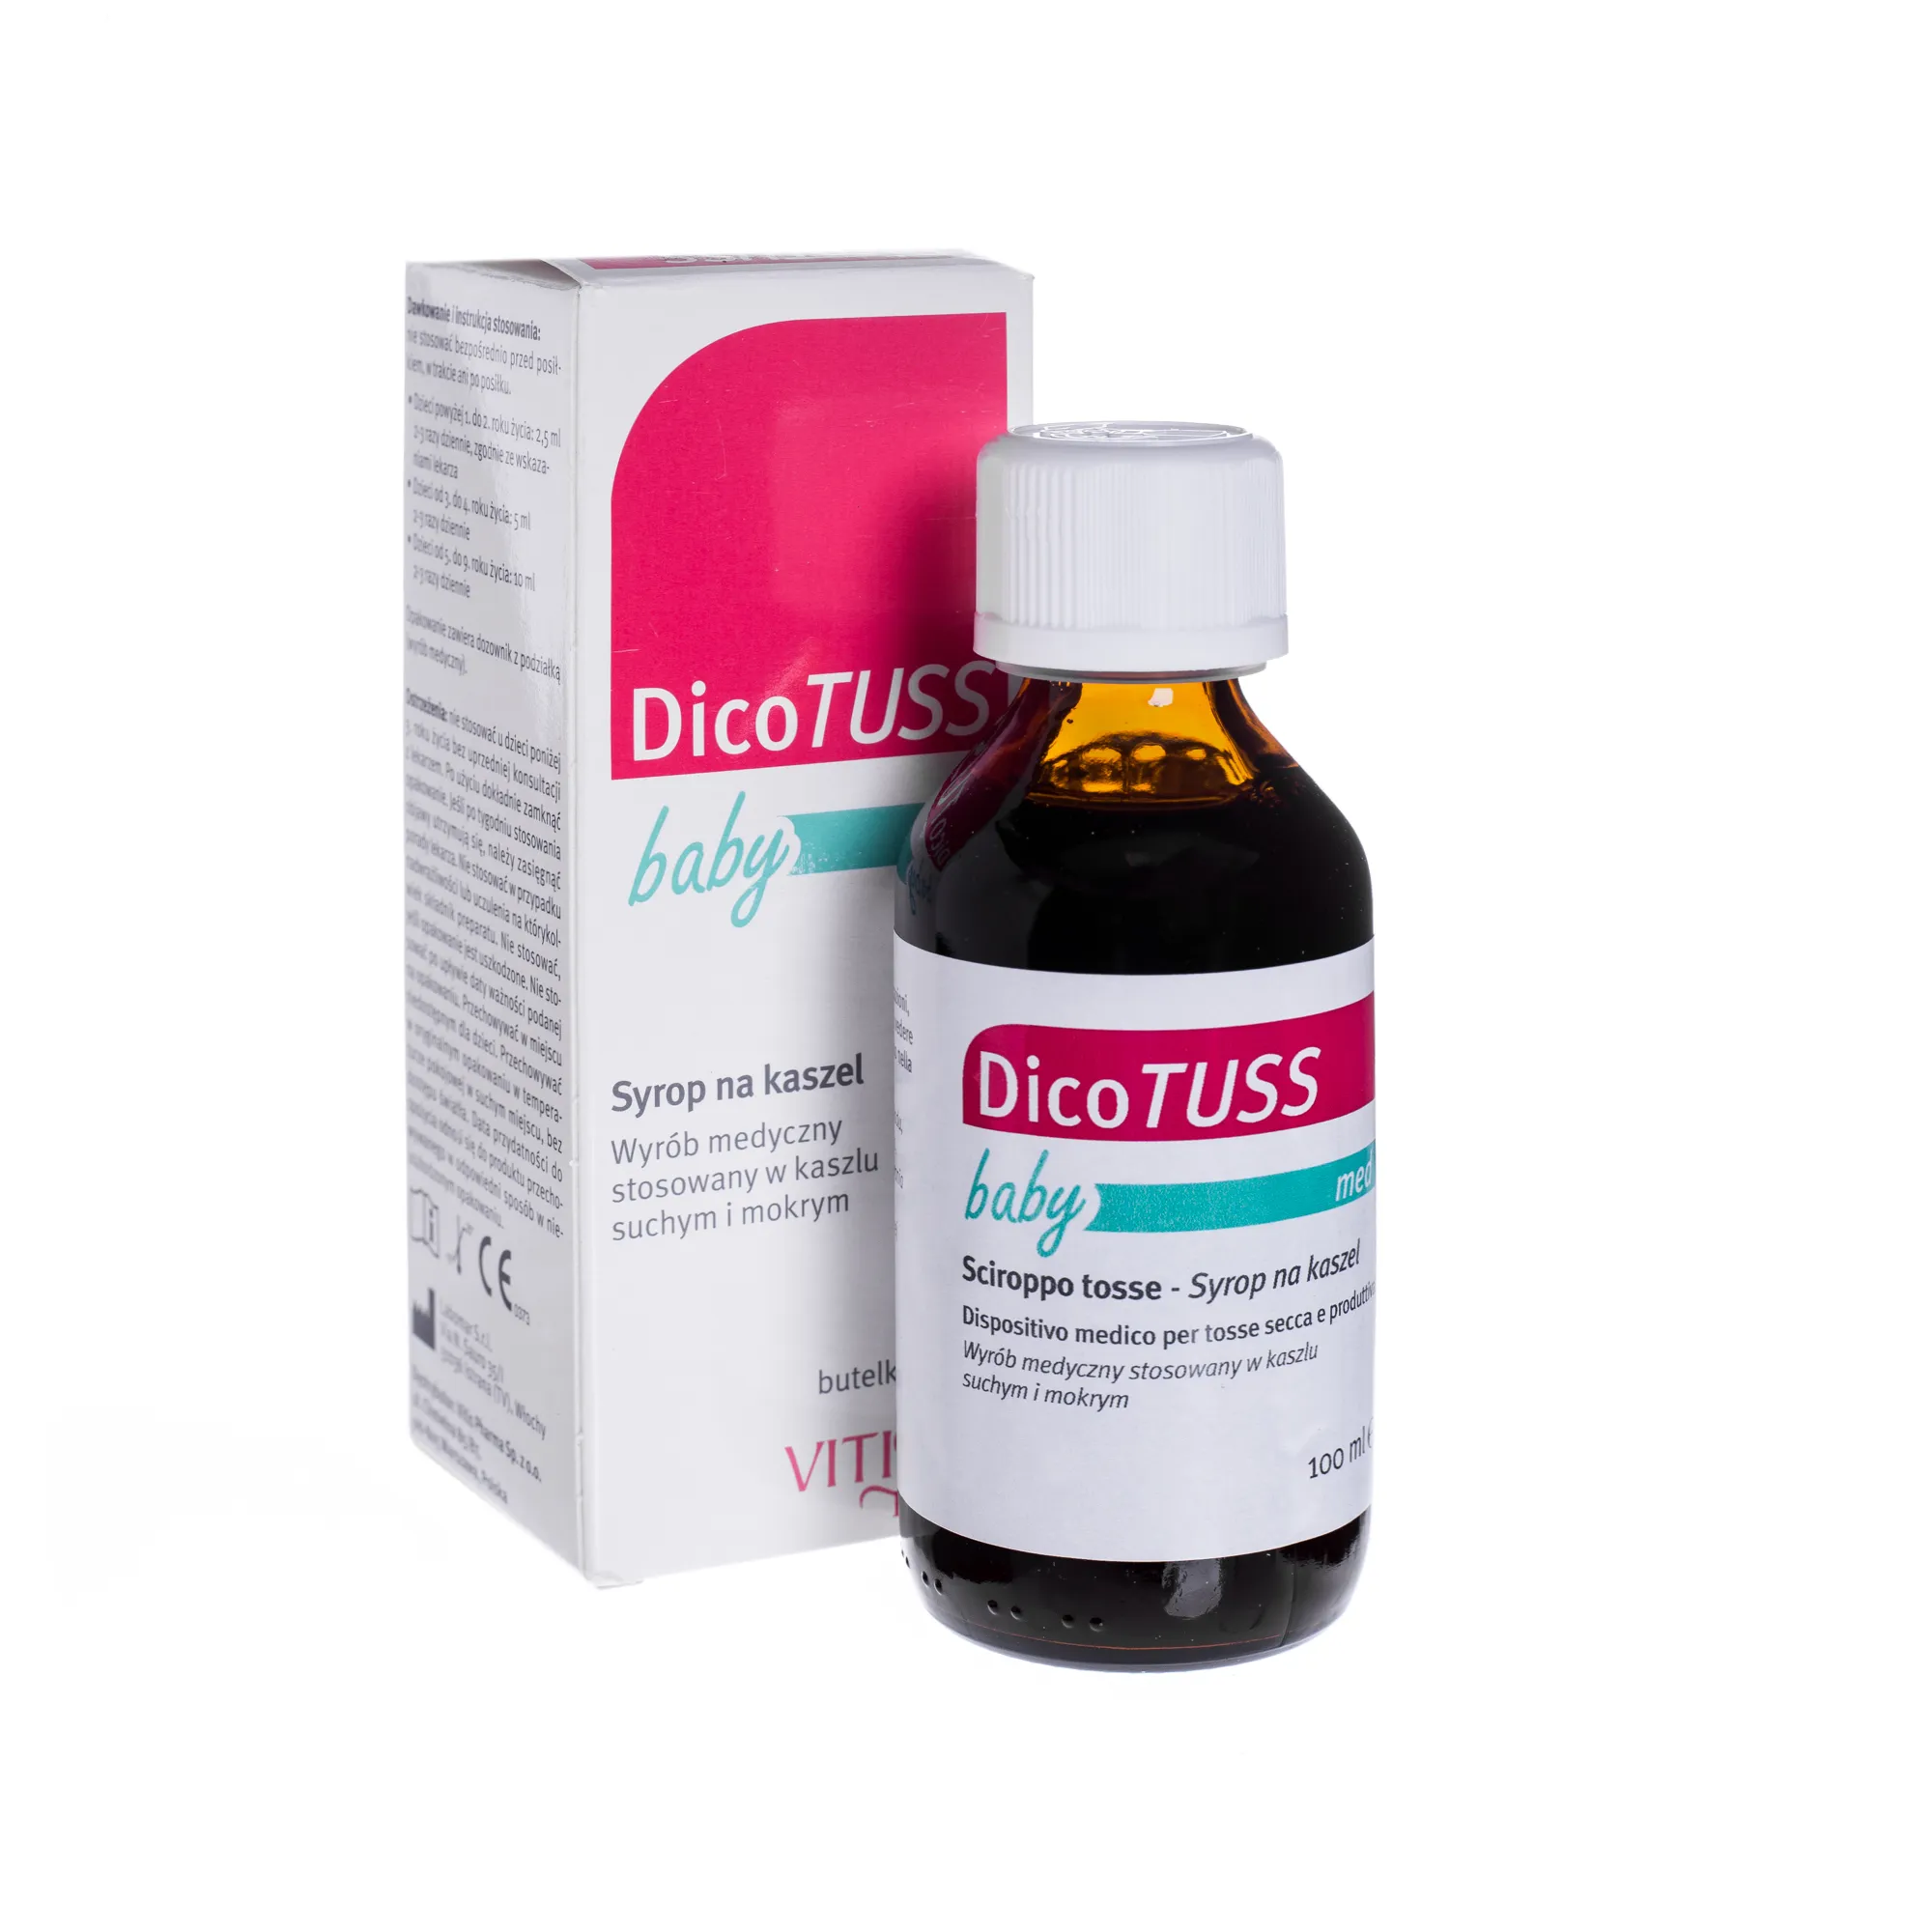 DicoTuss Baby Med, syrop na kaszel, 100 ml 